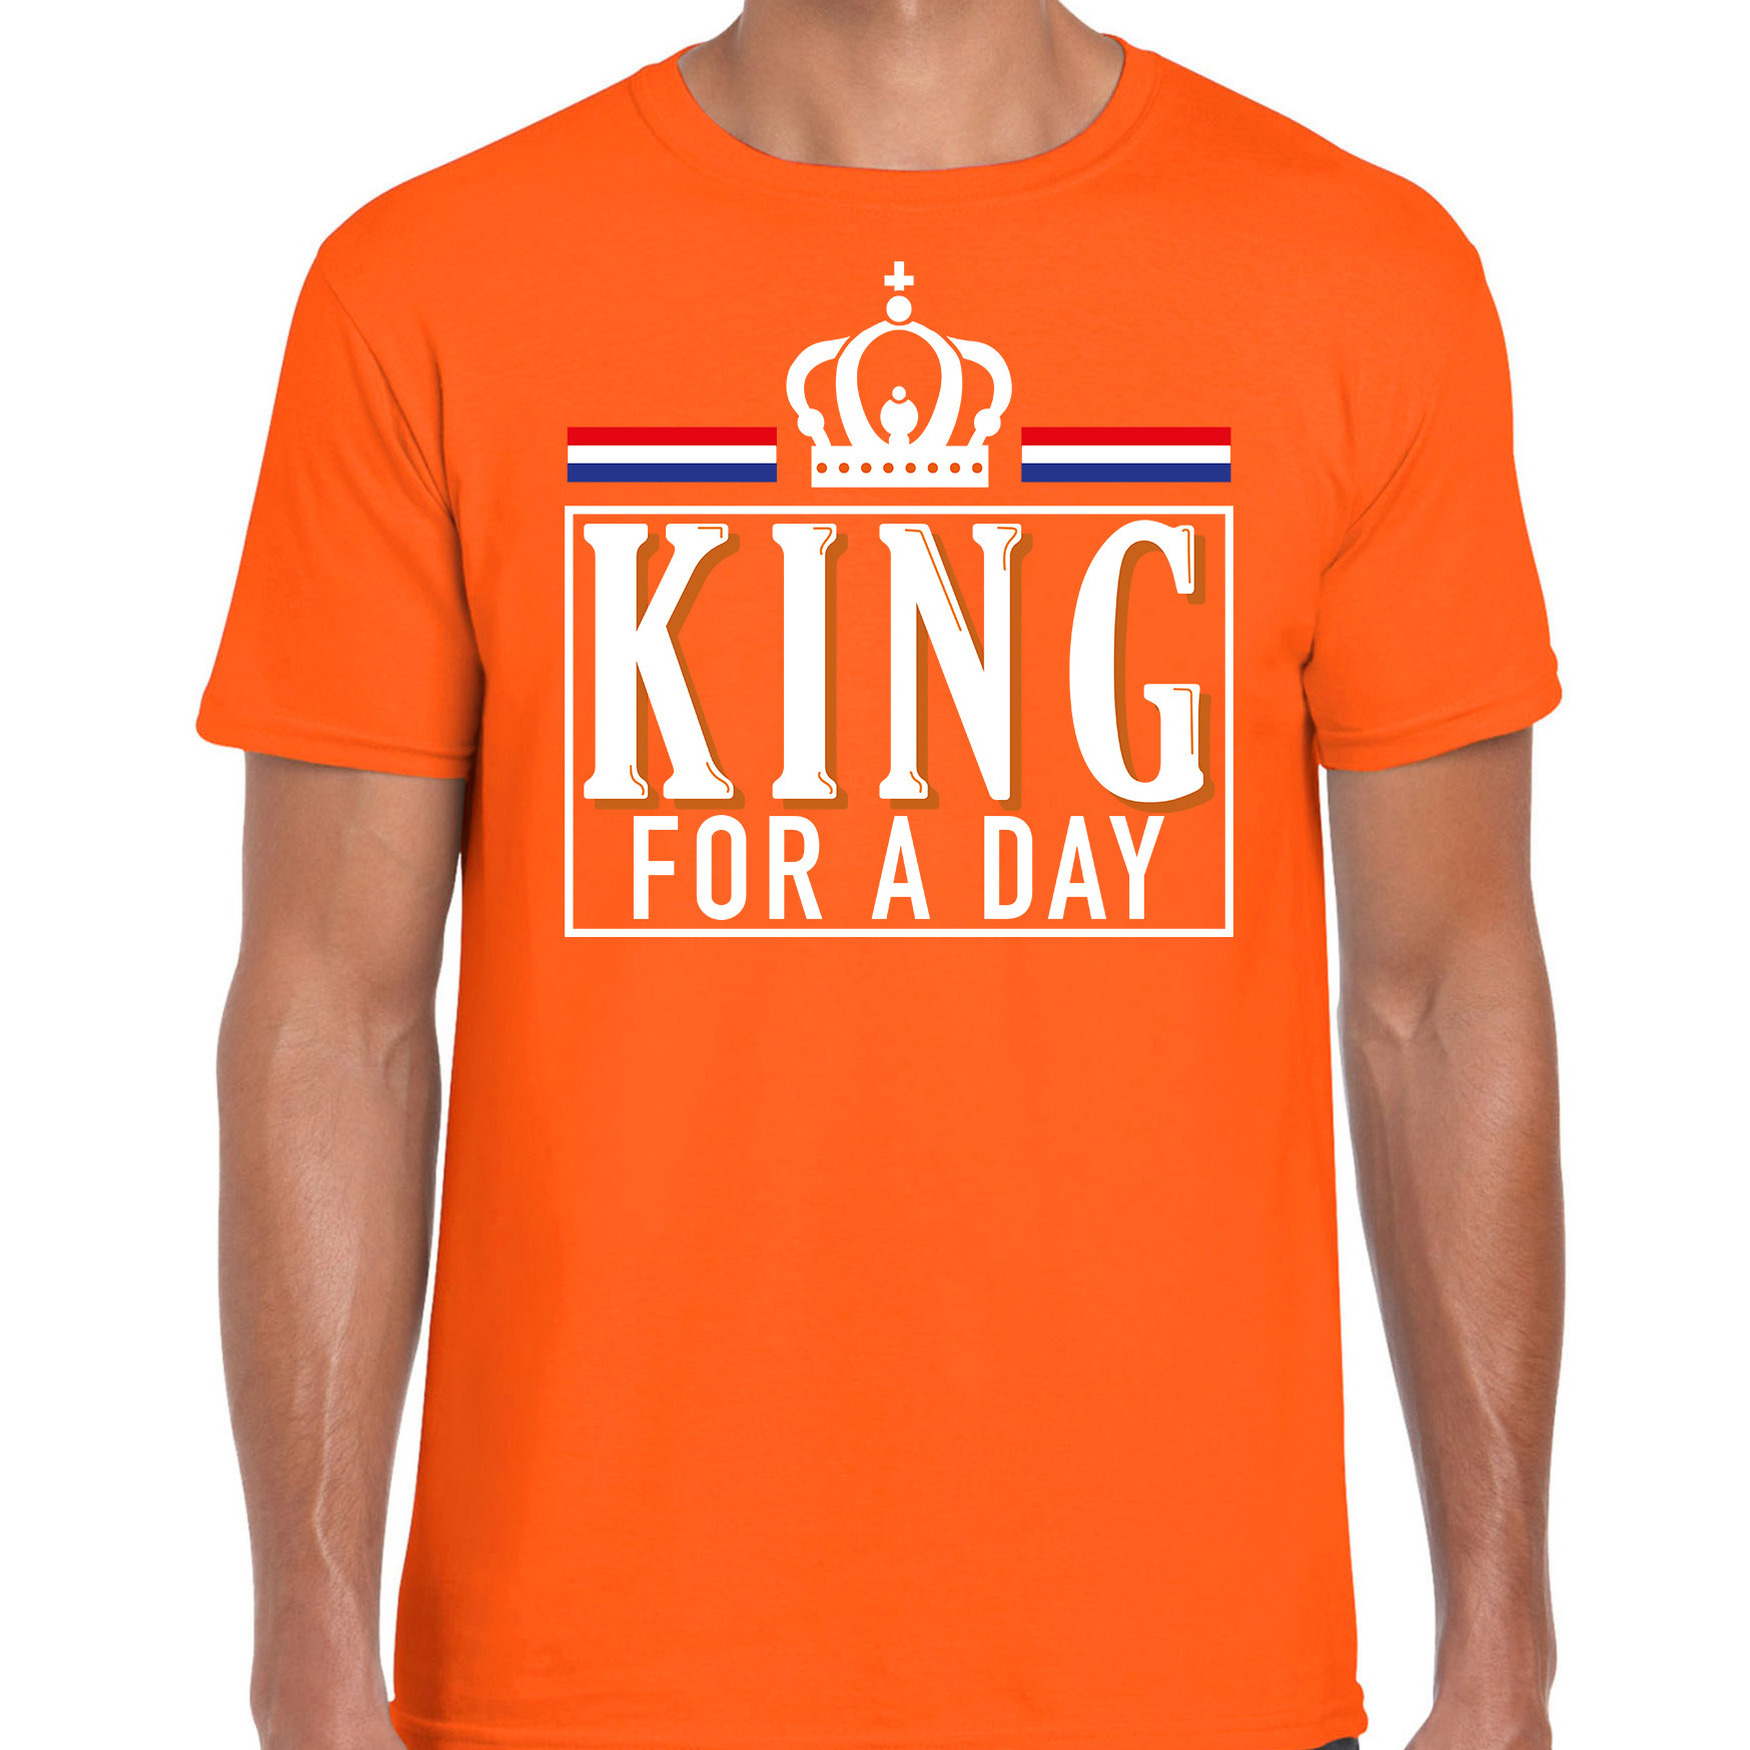 King for a day t-shirt oranje met witte letters voor heren Koningsdag shirts